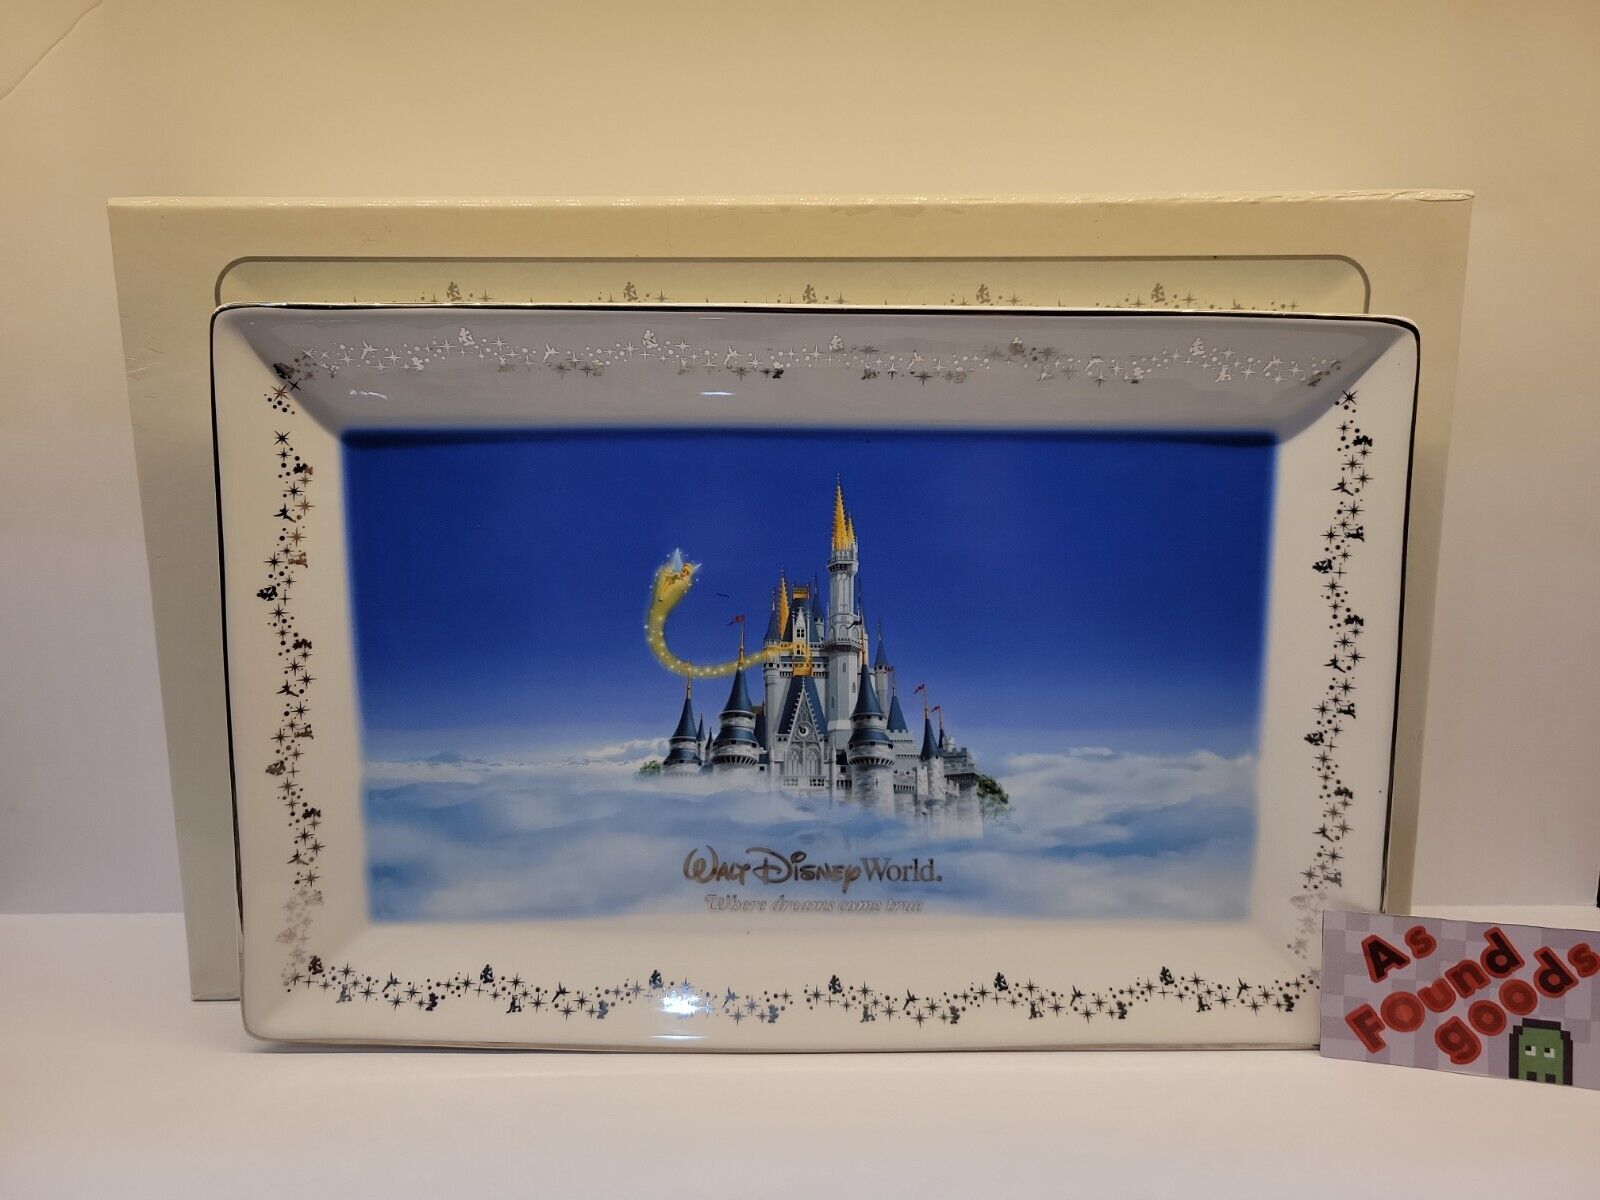 Walt Disney World Where Dreams Come True Collectible Serving Platter in Box 16”